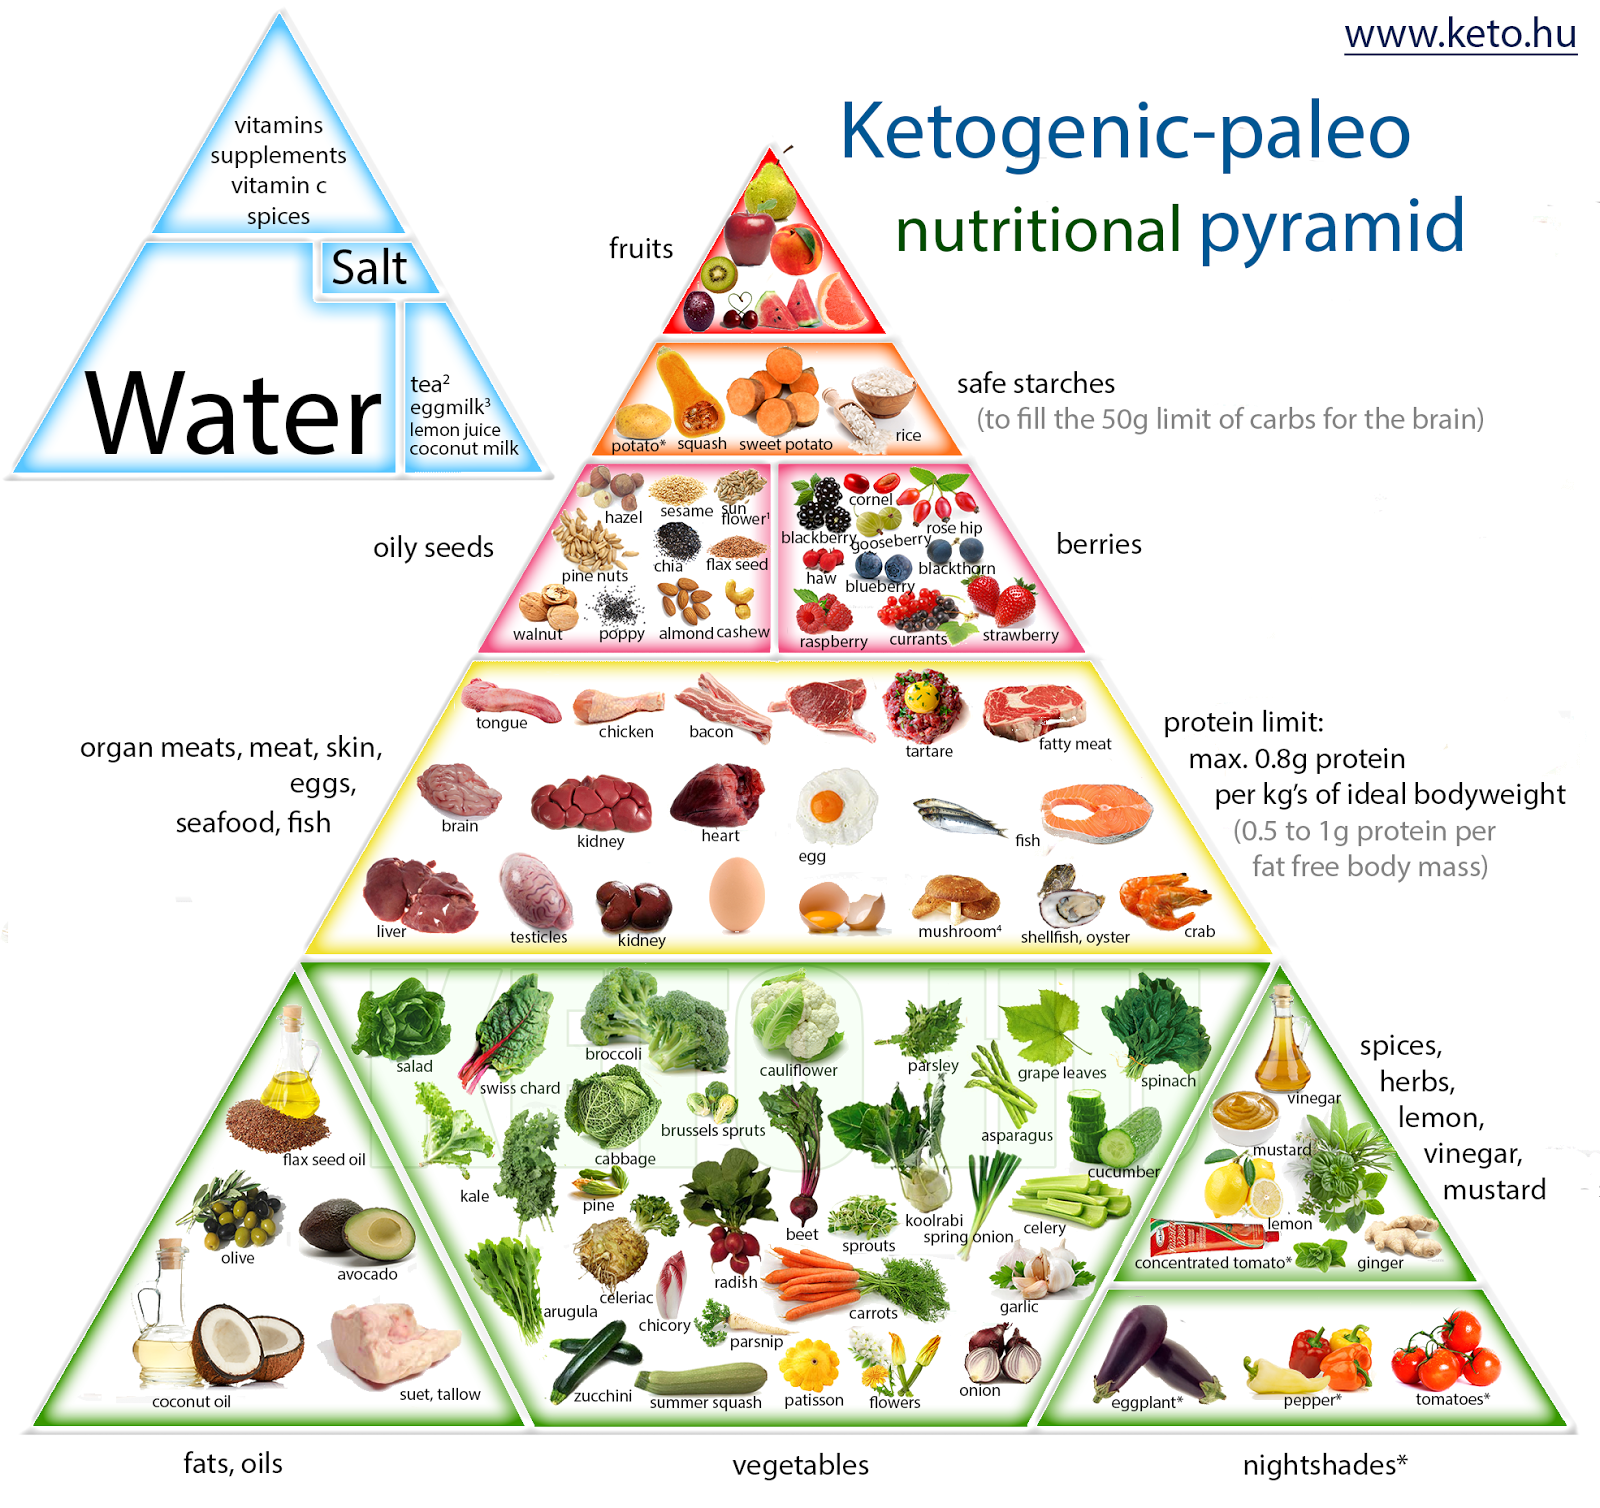 ketogenic-paleo-nutrition-pyramid2.png